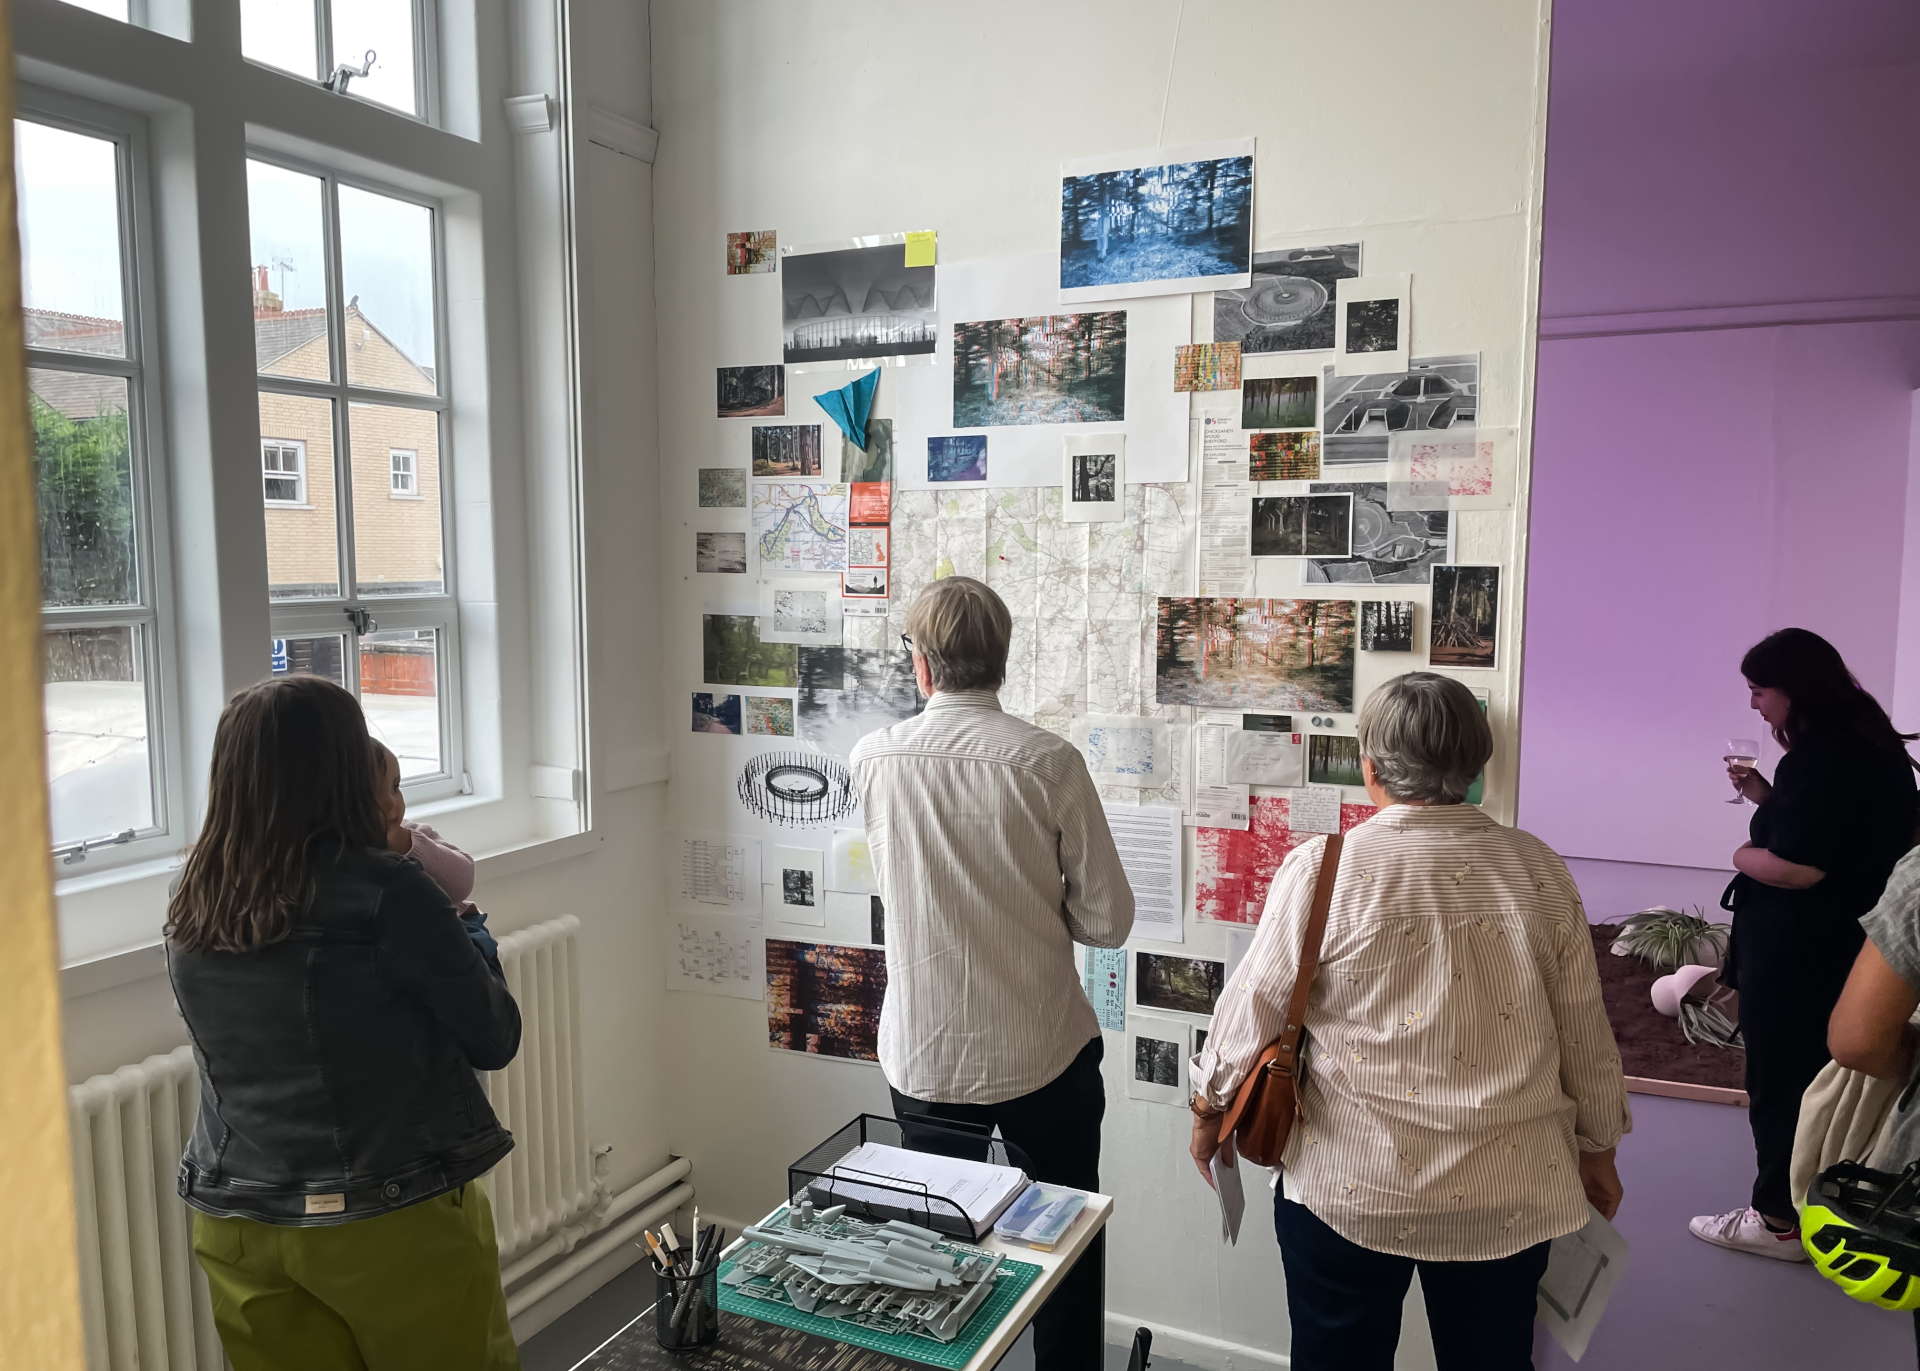 Visitors examining art exhibit on wall of studio